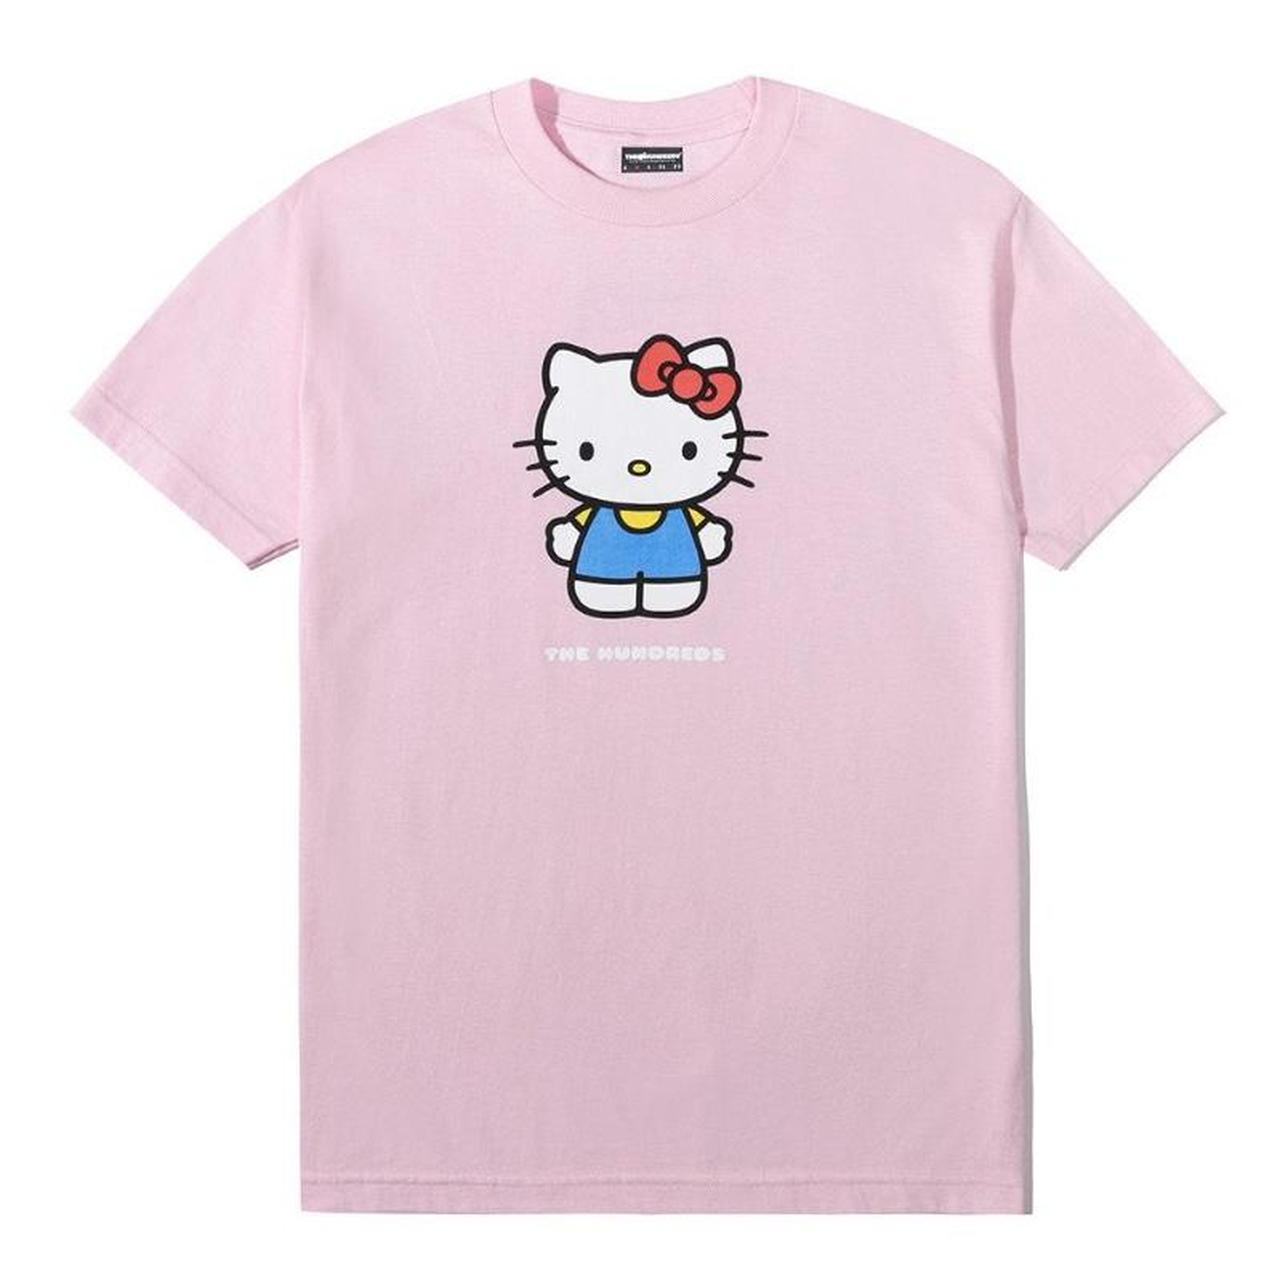 Sanrio Men's Pink and White T-shirt | Depop